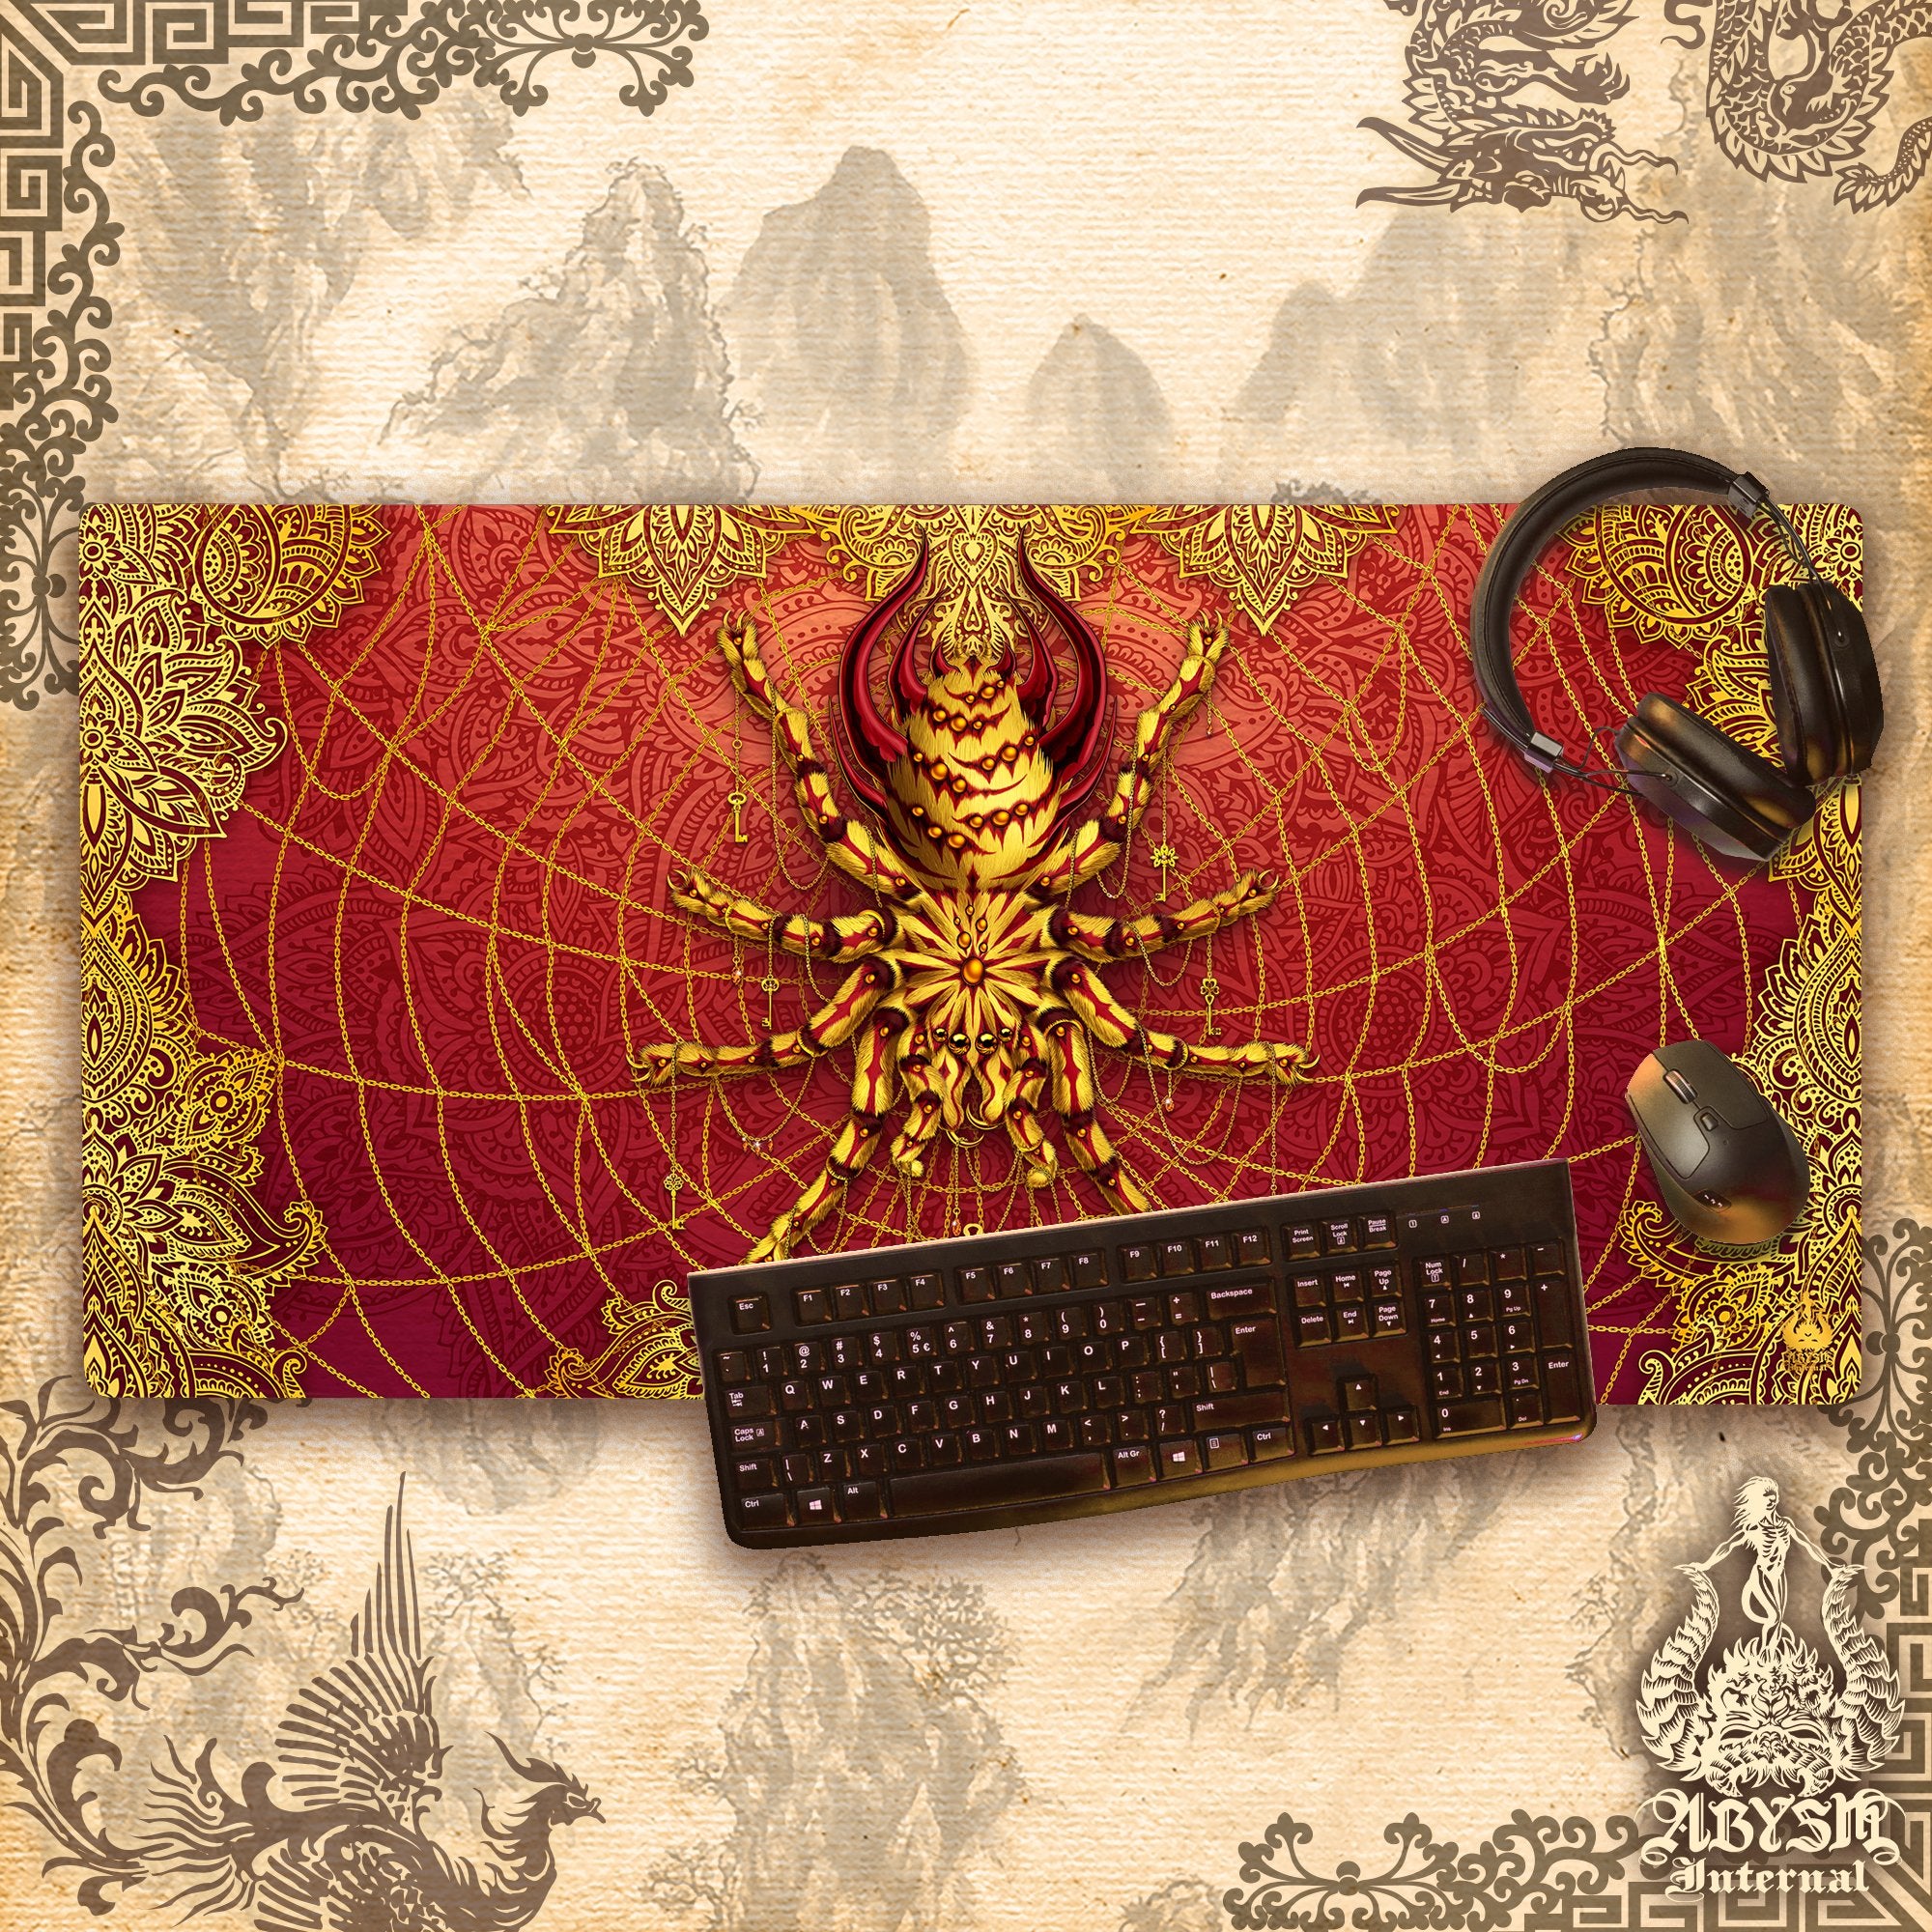 Boho Gaming Mouse Pad, Indie Desk Mat, Gamer Table Protector Cover, Spider Workpad, Tarantula Art Print - Mandalas - Abysm Internal